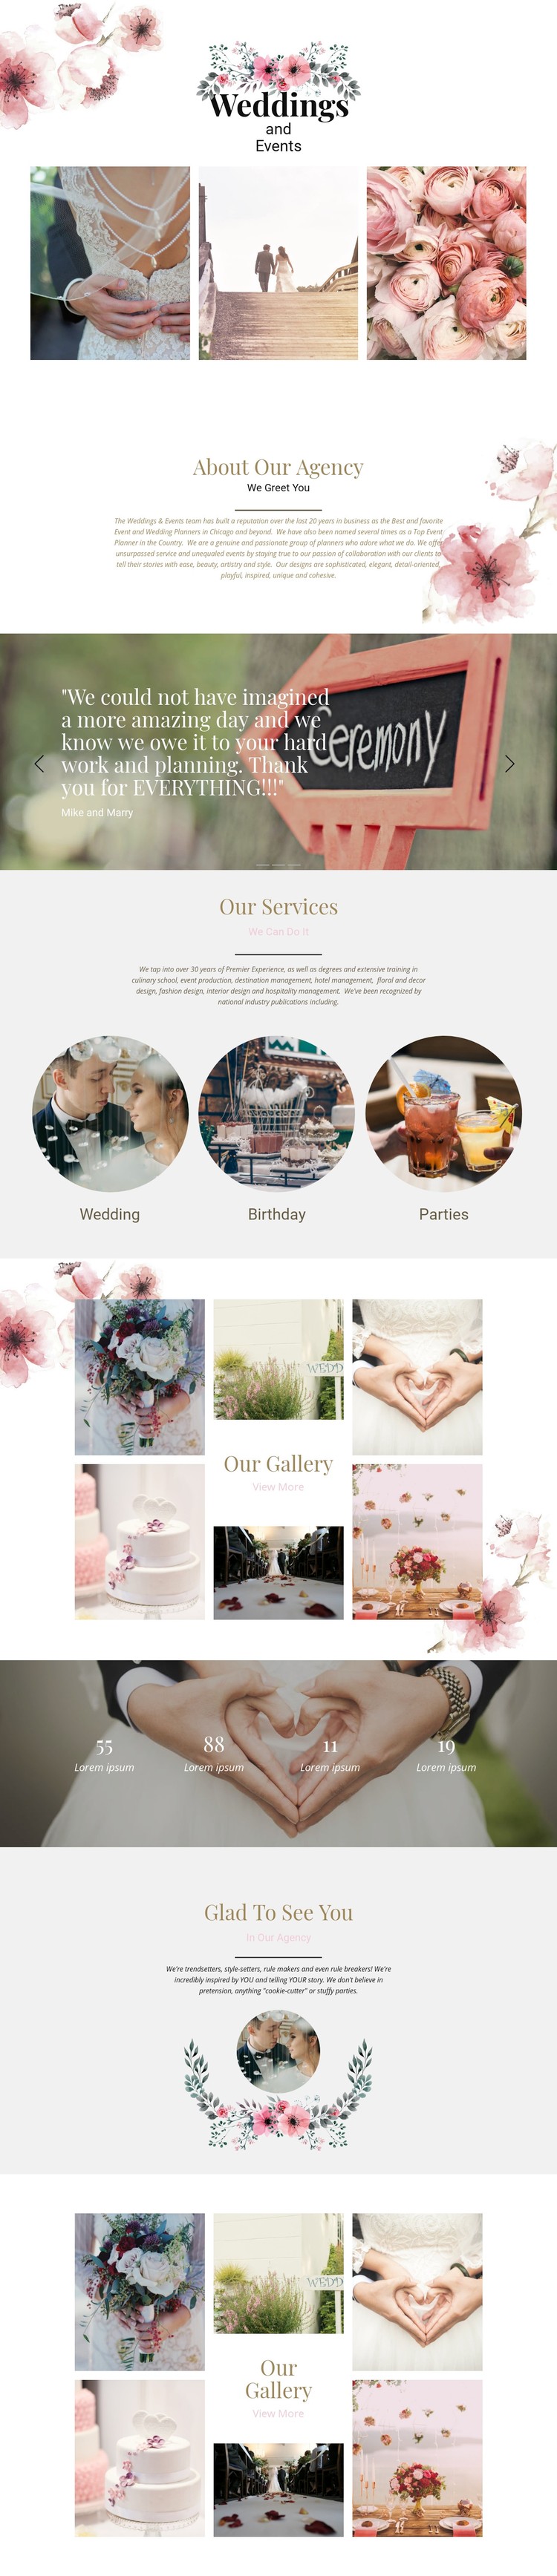 Moments of wedding Webflow Template Alternative